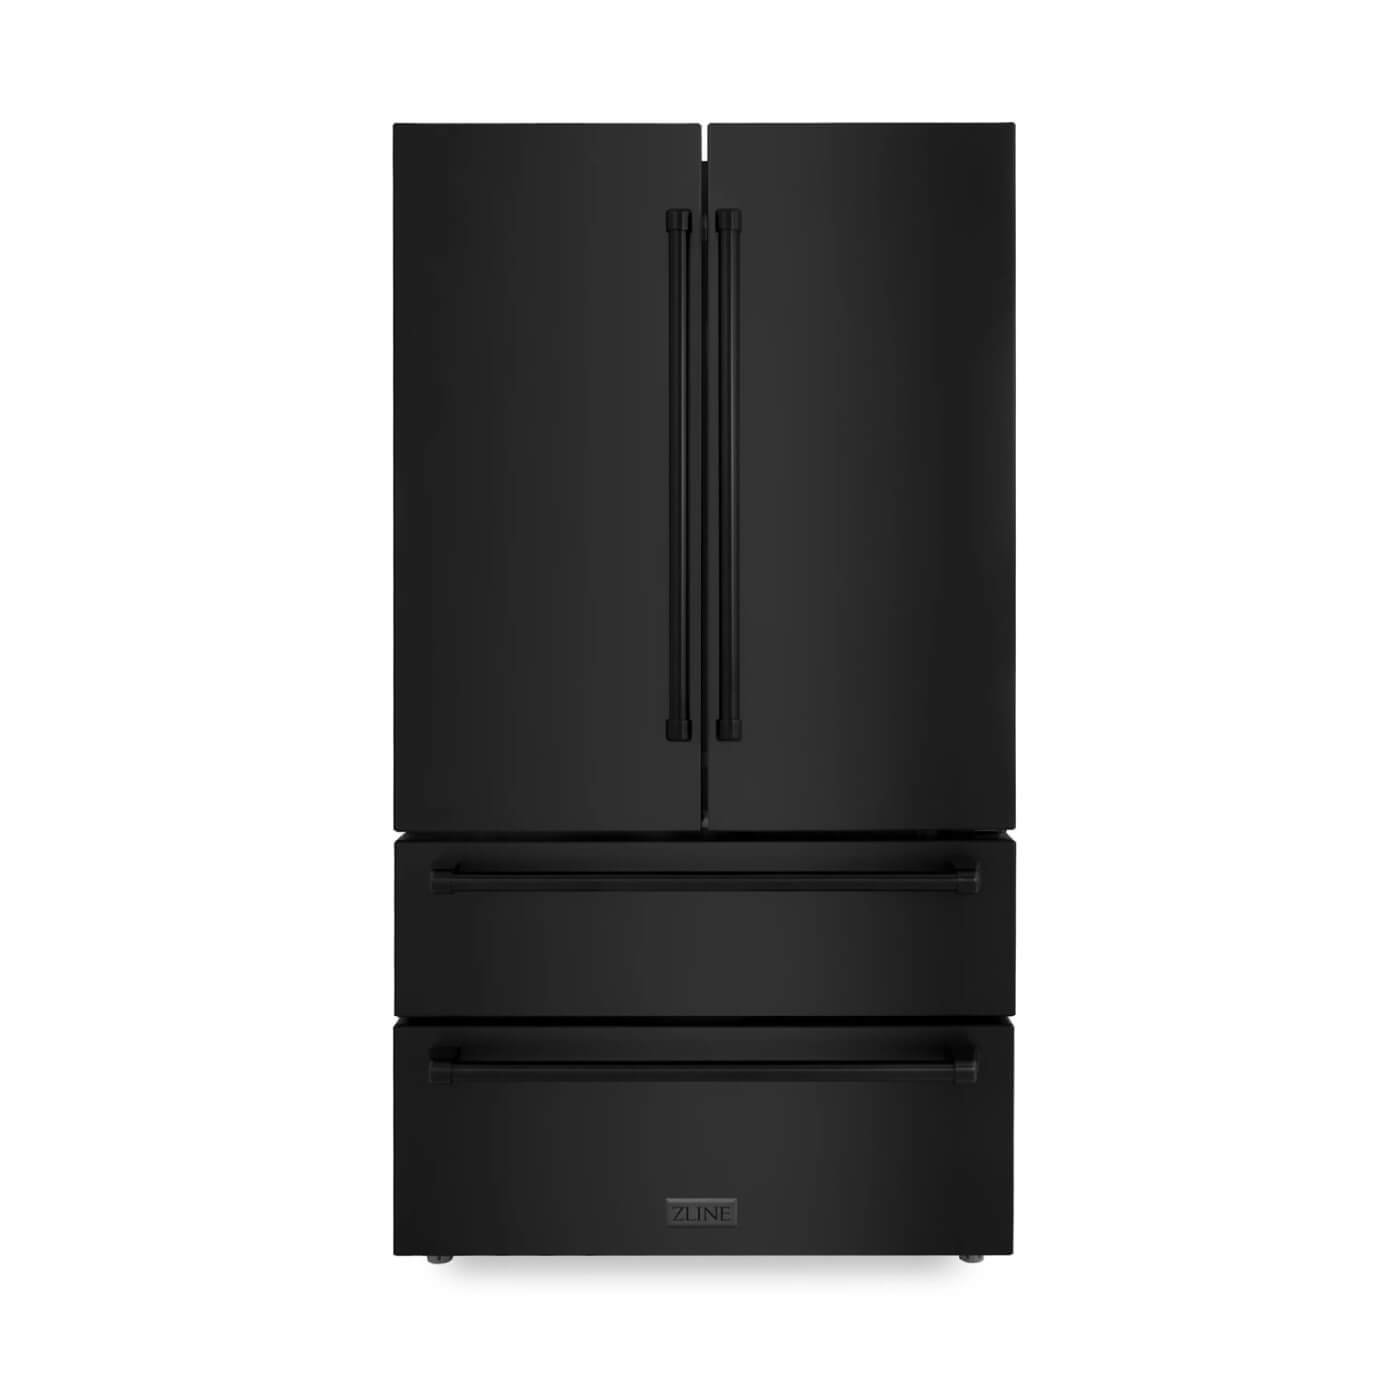 ZLINE Luxury French Door Refrigerator in Black Stainless Steel